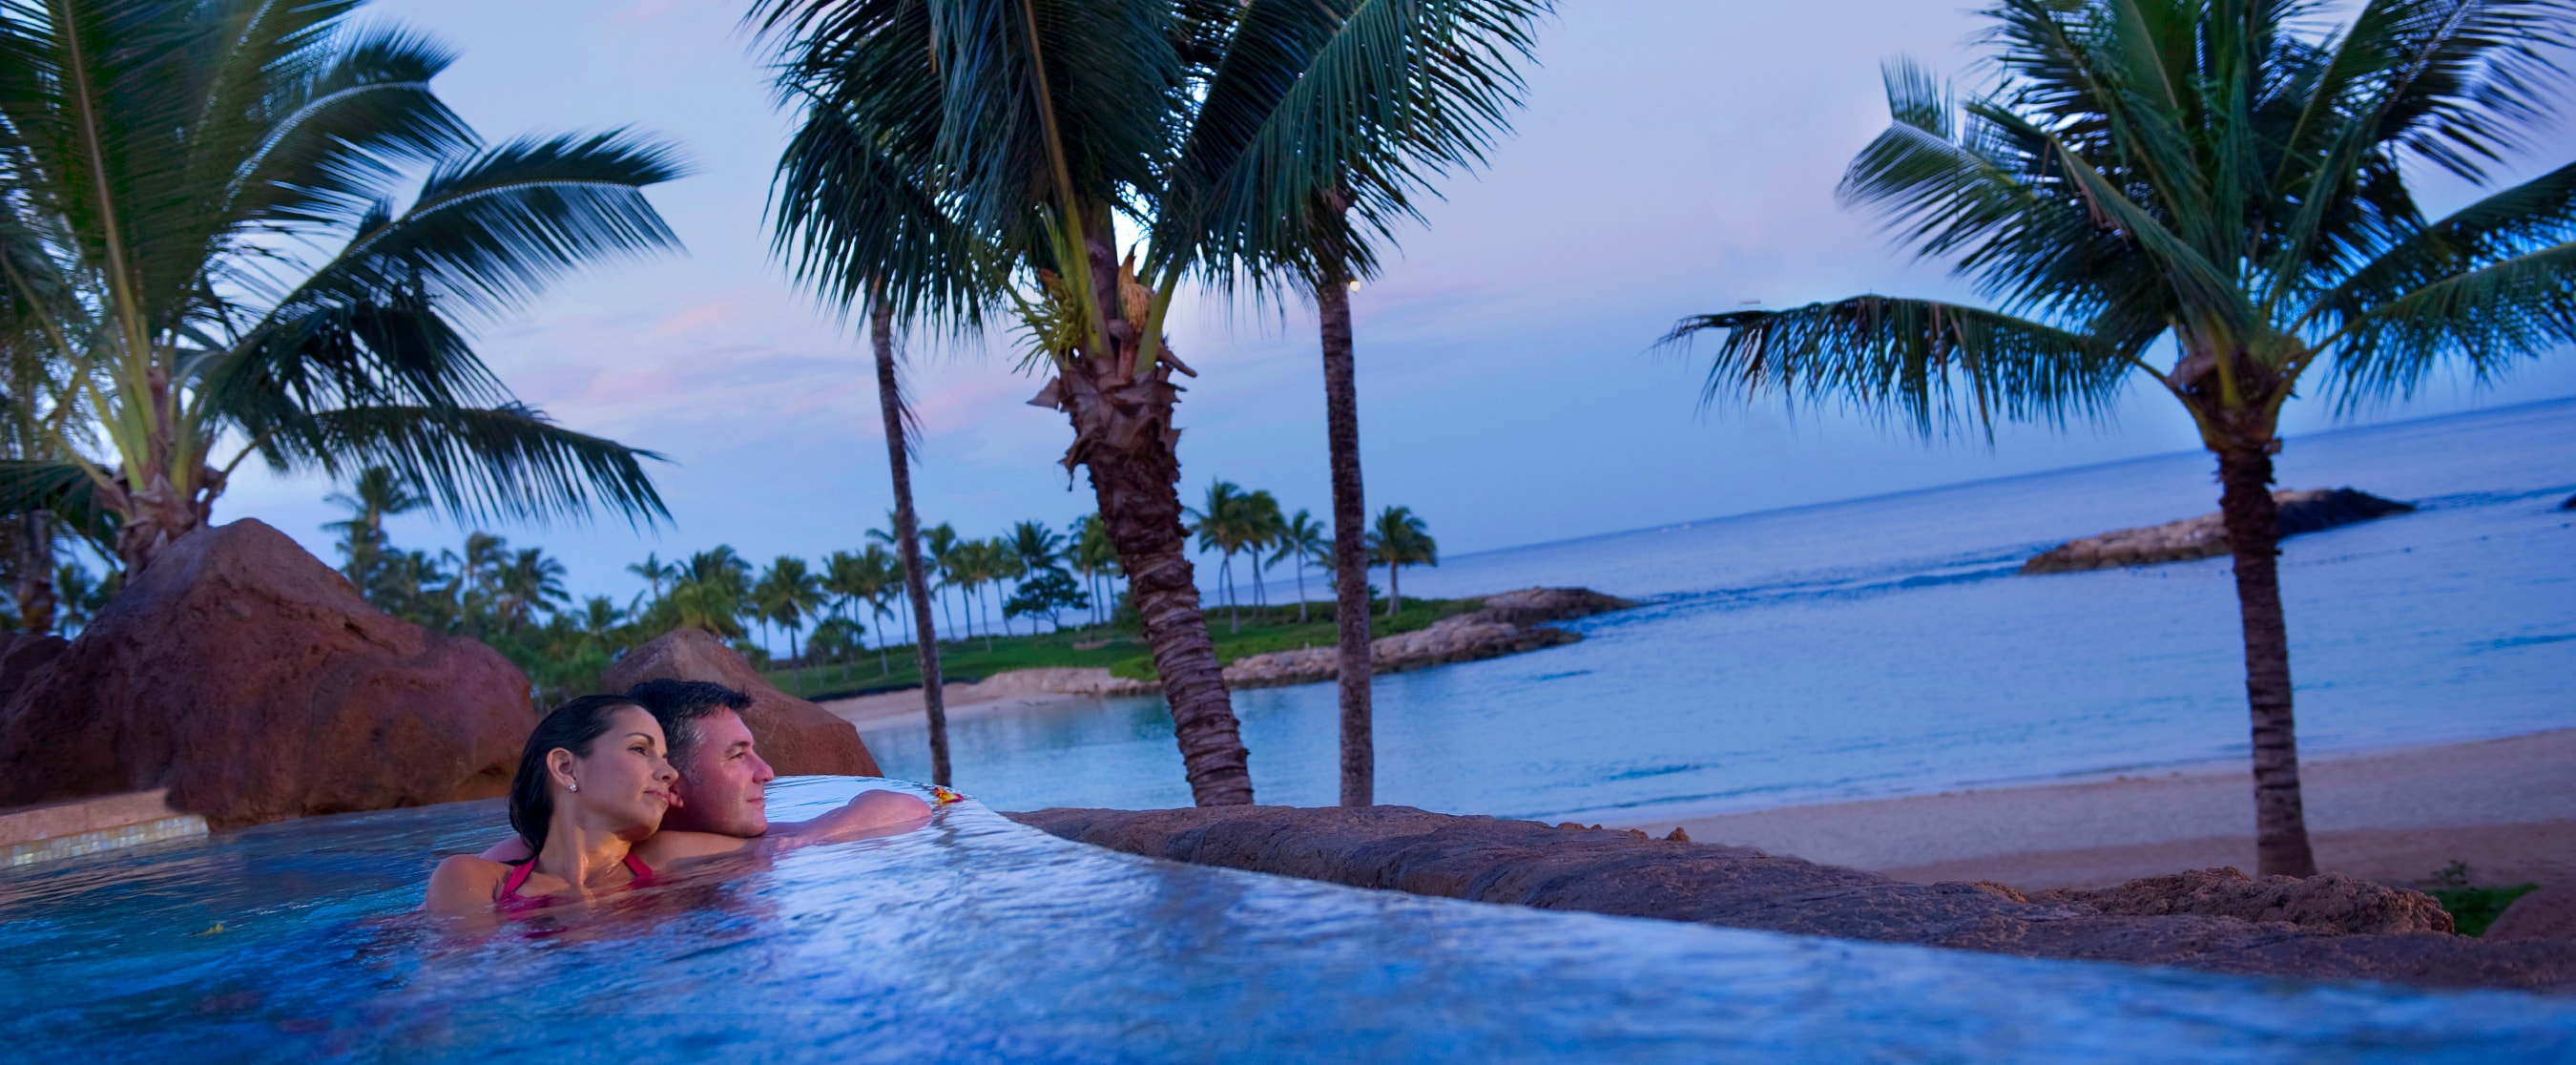 Outdoor Whirlpool Spas  Aulani Hawaii Resort  Spa